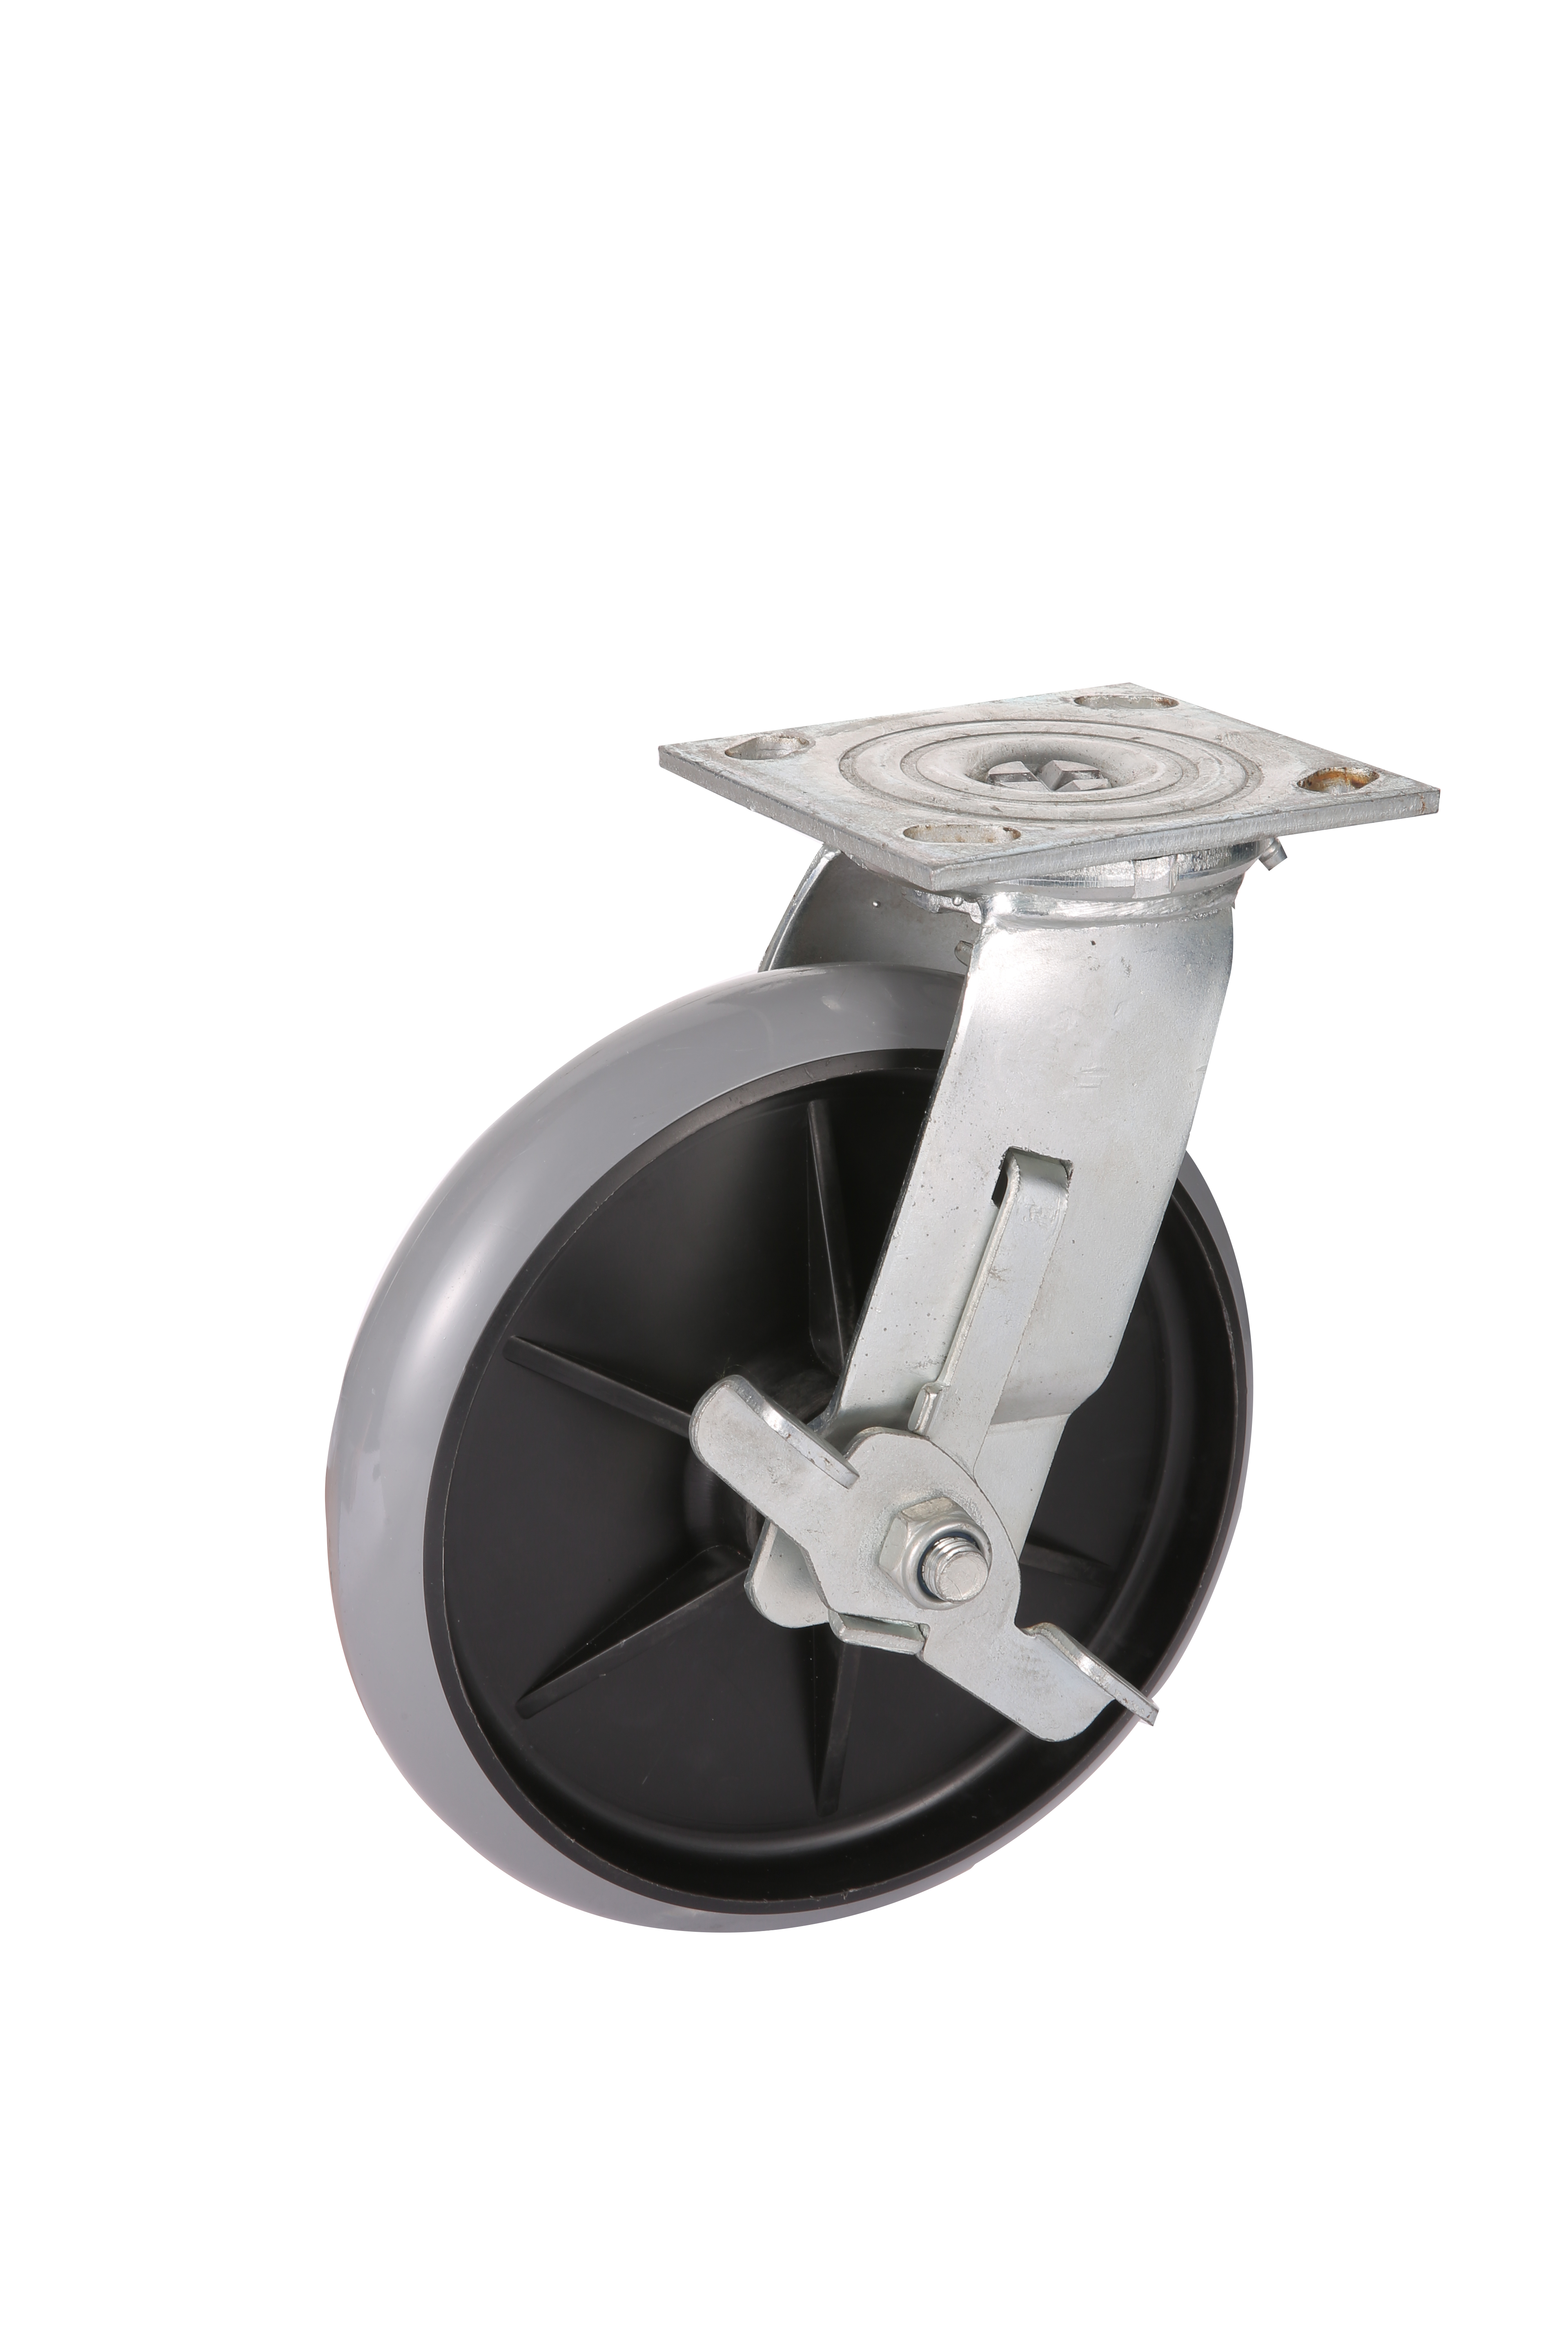 7~8'' Light Duty Plate Swivel Furniture Caster Wheel with Side Brakes